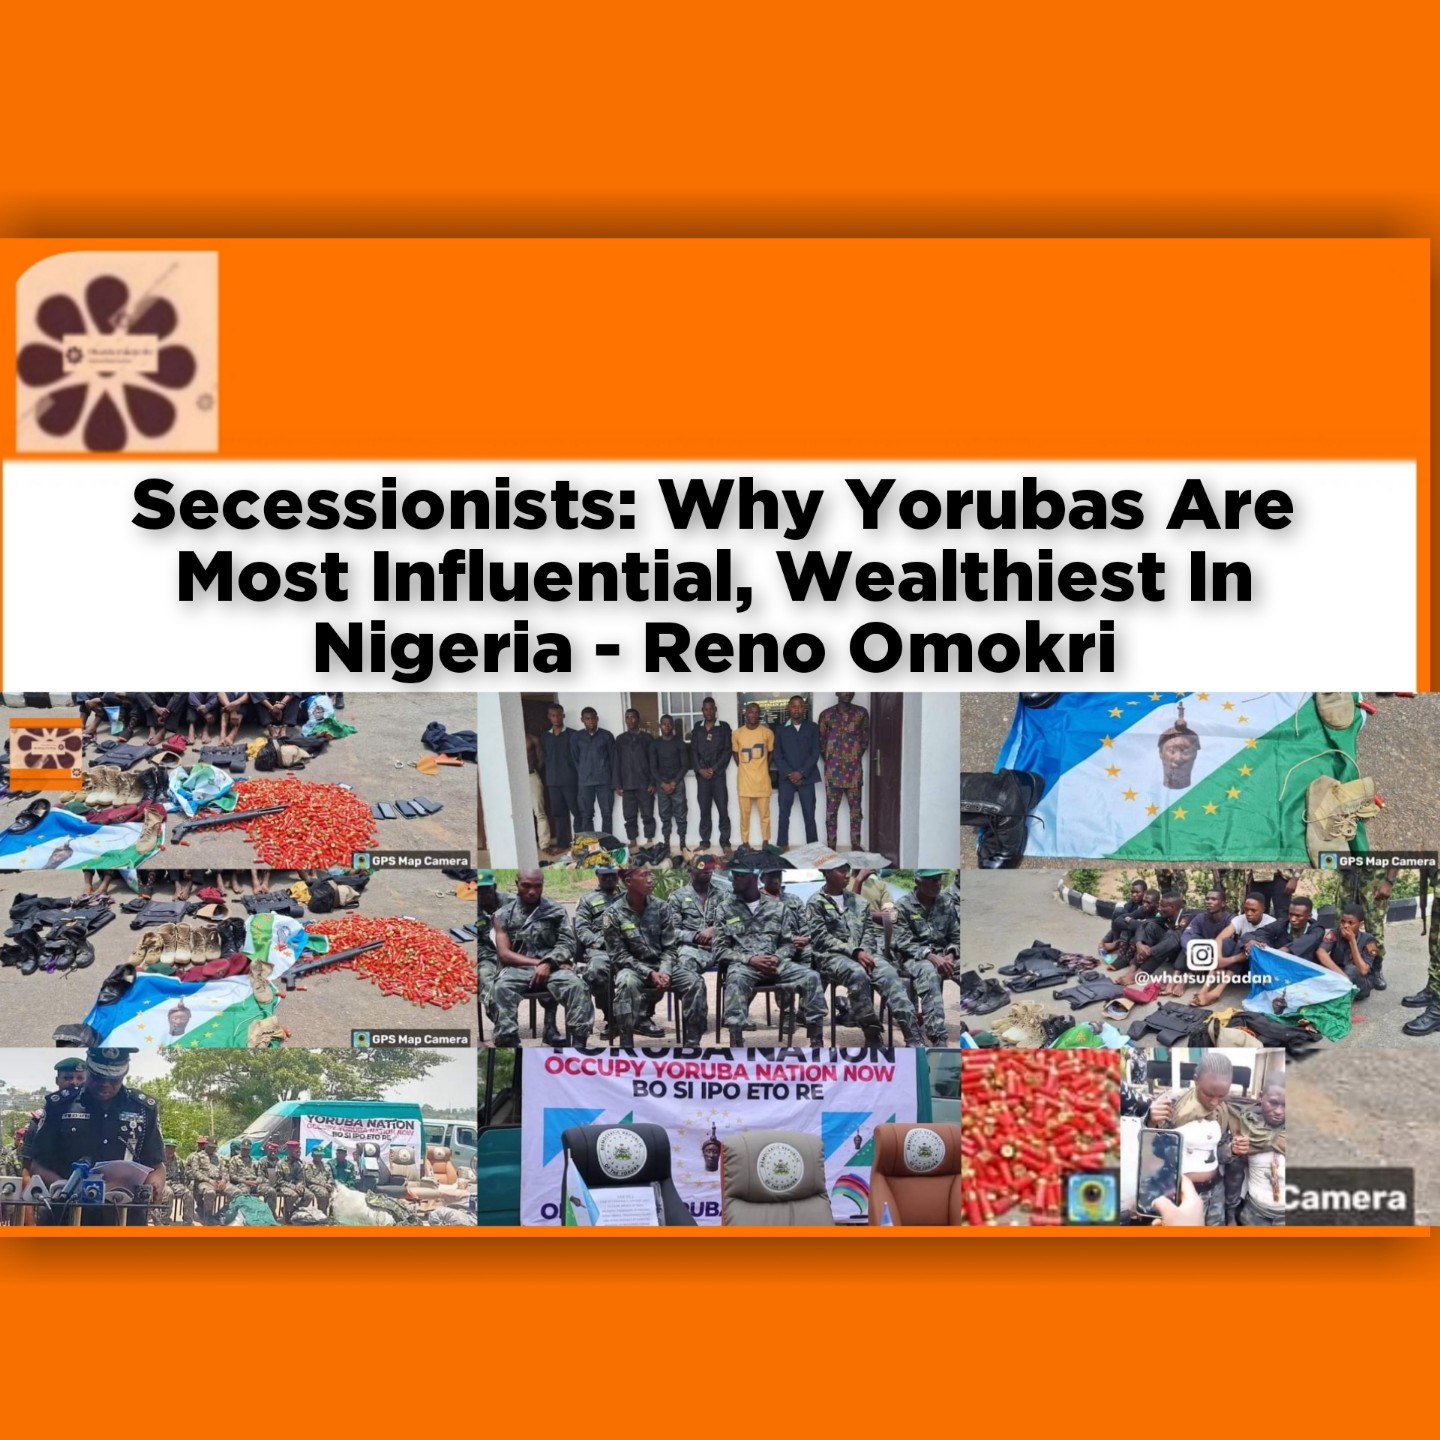 Secessionists: Why Yorubas Are Most Influential, Wealthiest In Nigeria - Reno Omokri ~ OsazuwaAkonedo #Kenya